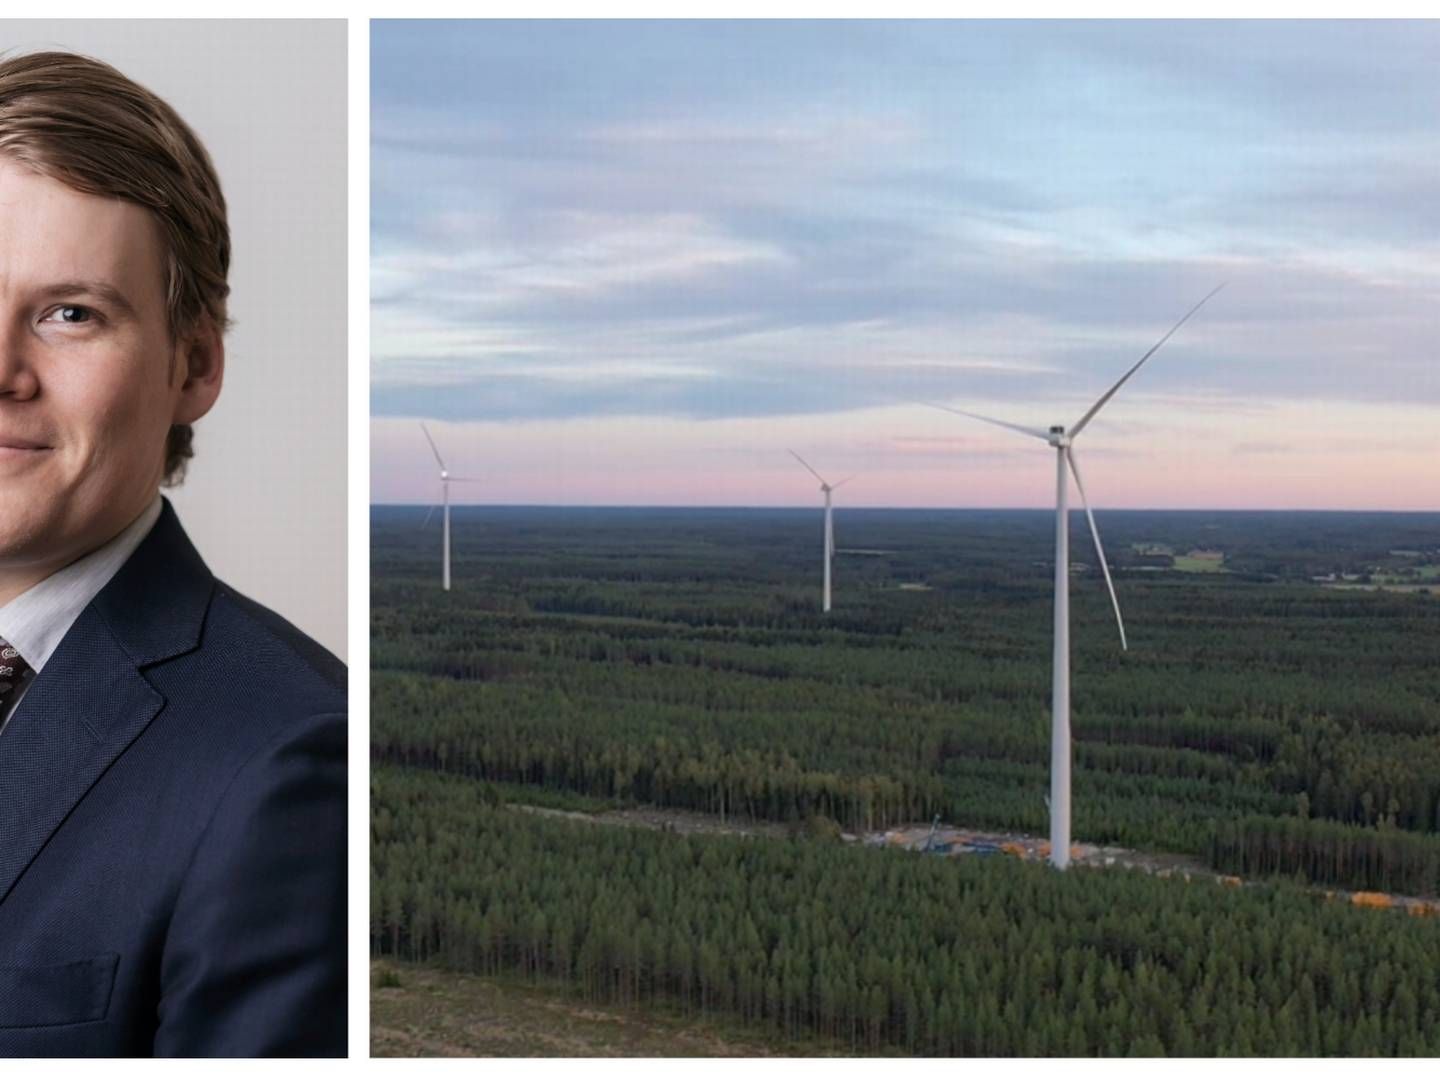 Jimmy Forsman, portfolio manager for Ålandsbanken Funds Ltd and Helen's wind farm in Lakiakangas, Finland. | Photo: PR Ålandsbanken and Helen.